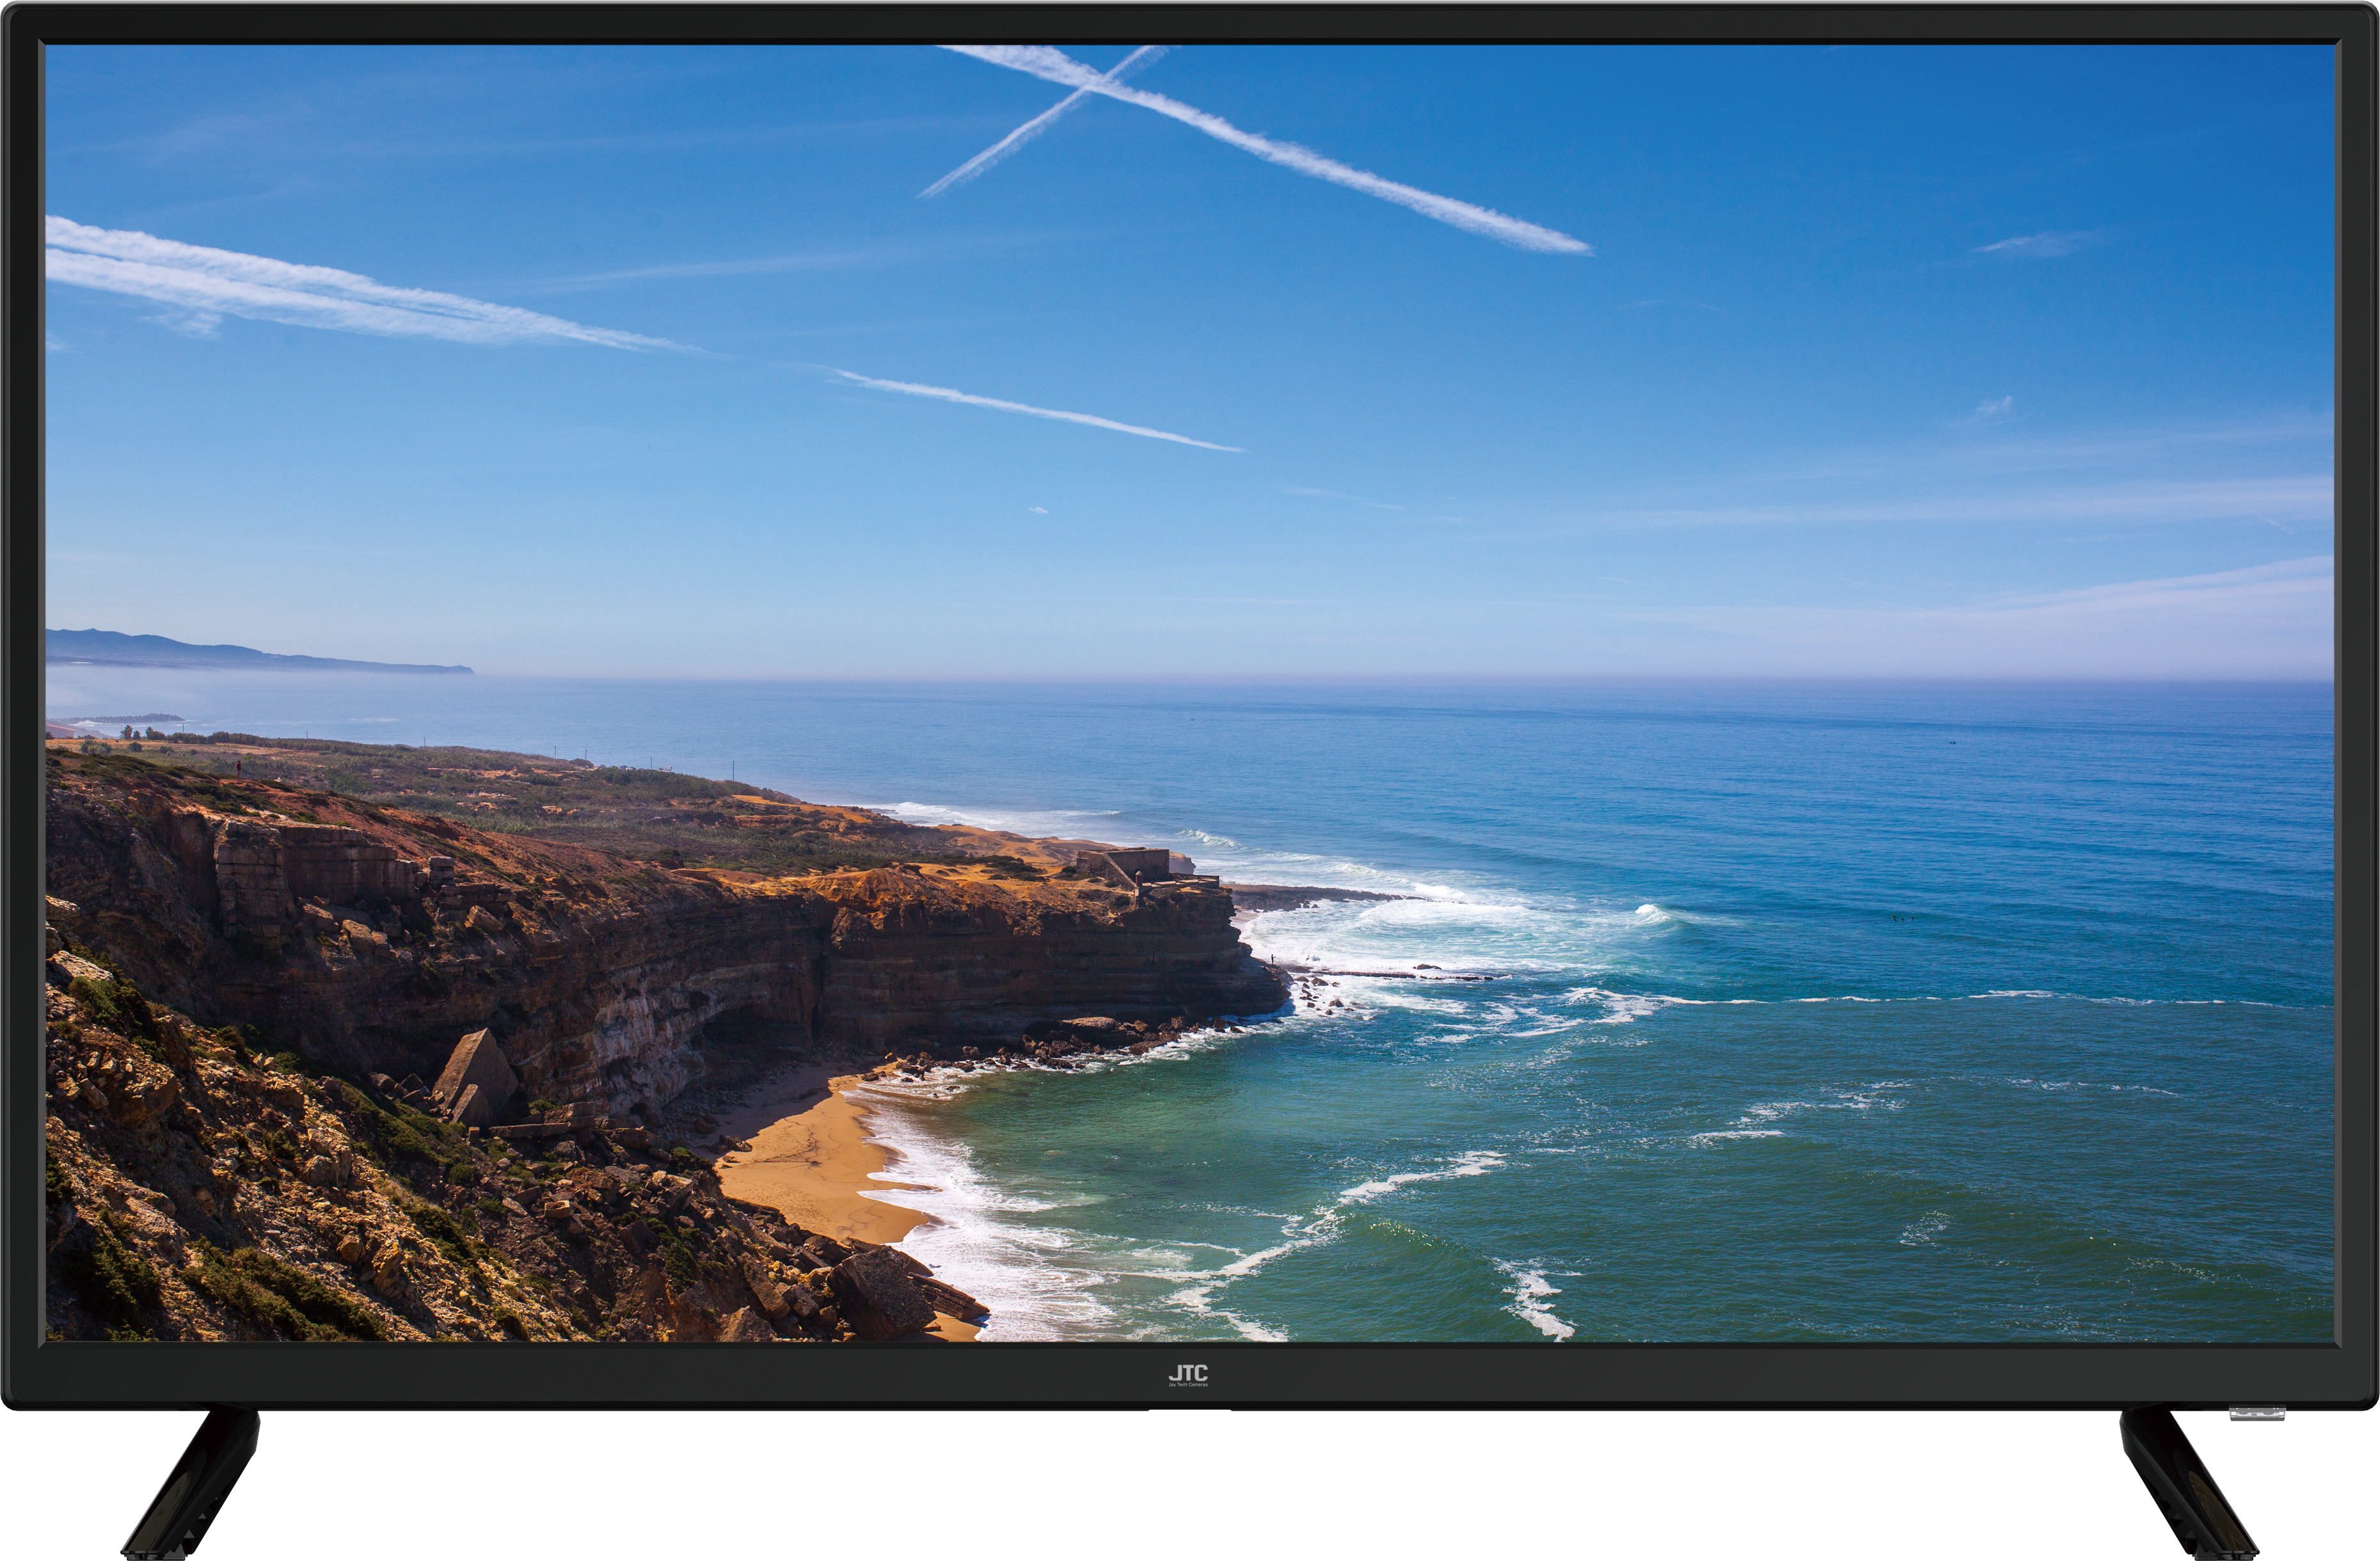 JTC HD Zoll Smart HD, LED / 80 TV TV, OS23250HSA TV Android) cm, 32 SMART (Flat